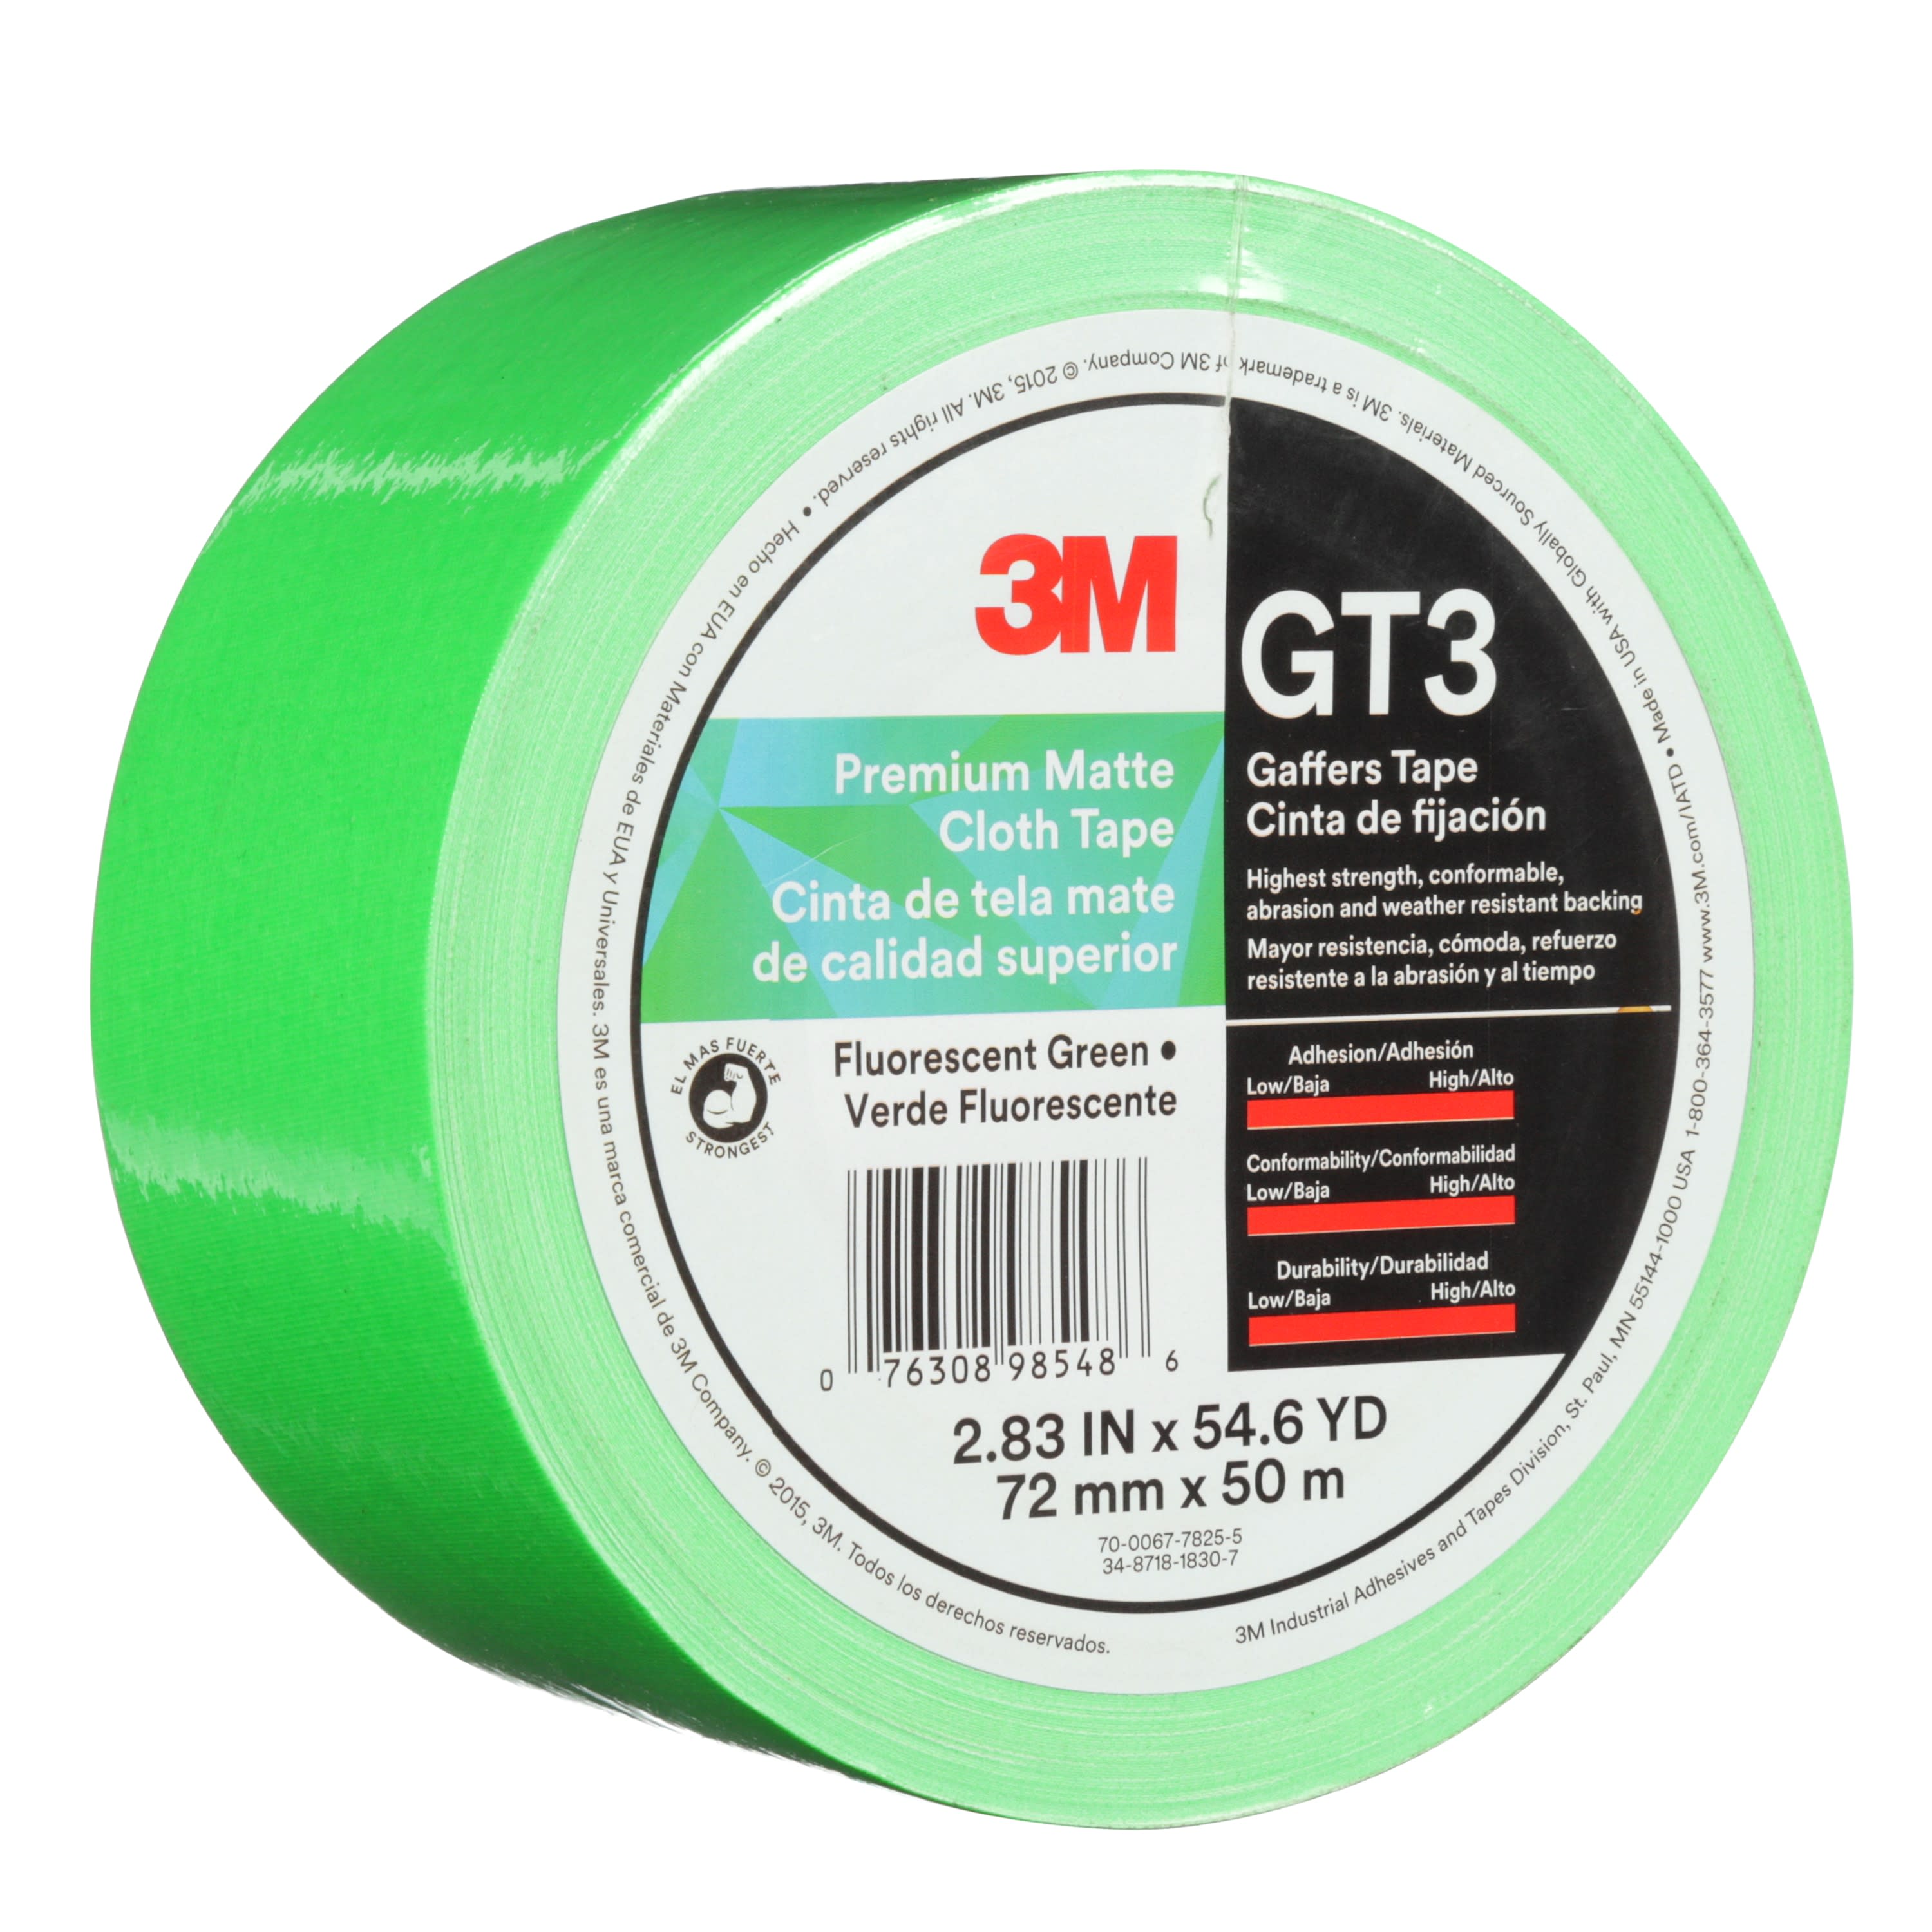 3M™ Premium Matte Cloth (Gaffers) Tape GT3, Fluorescent Green, 72 mm x
50 m, 11 mil, 16 per case